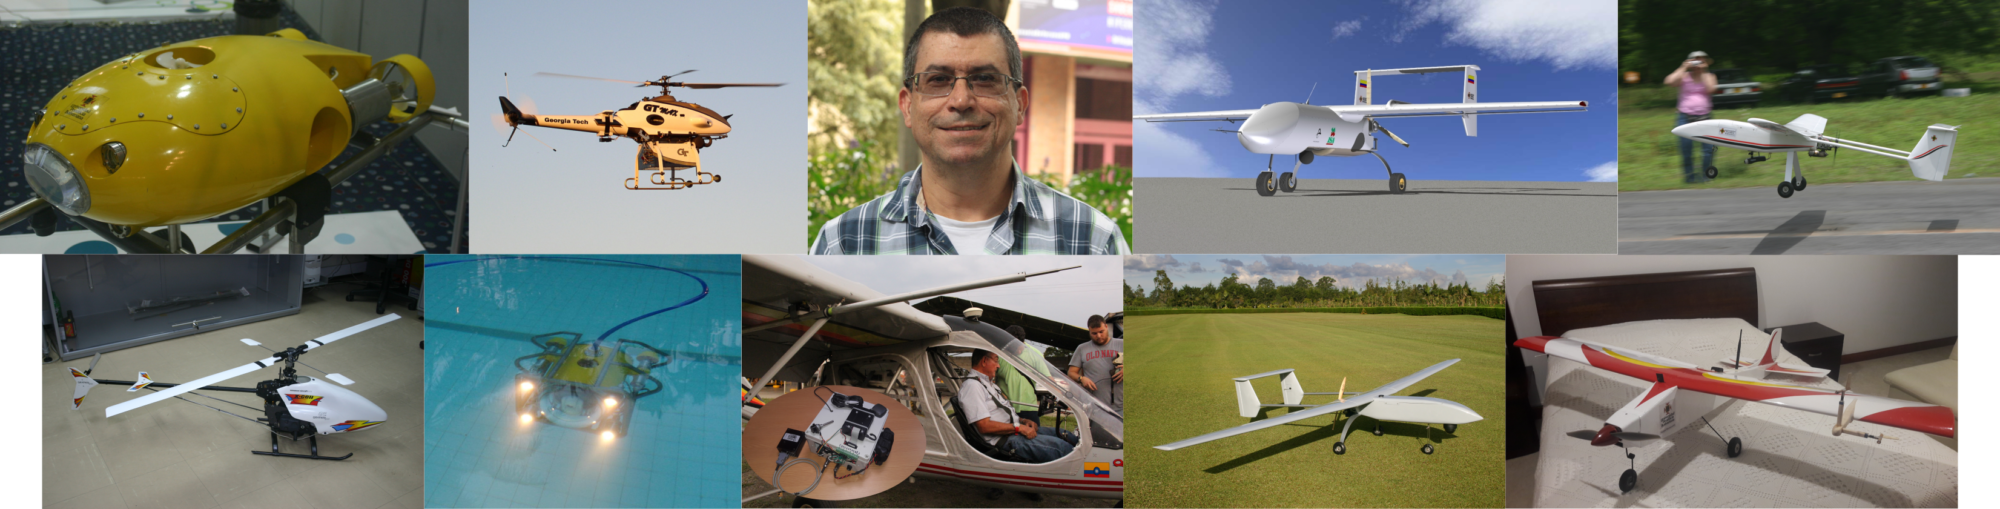 Luis Benigno Gutierrez Zea projects: VIsor 2 ROV, GTmax, Luis photo, Aura UAV, Aura Jr UAV, Colibri, Visor 3 ROV, flight data recorder for acquisition of flight test data, Andean Condor UAV, UAV for research in flight mechanics and flight controls